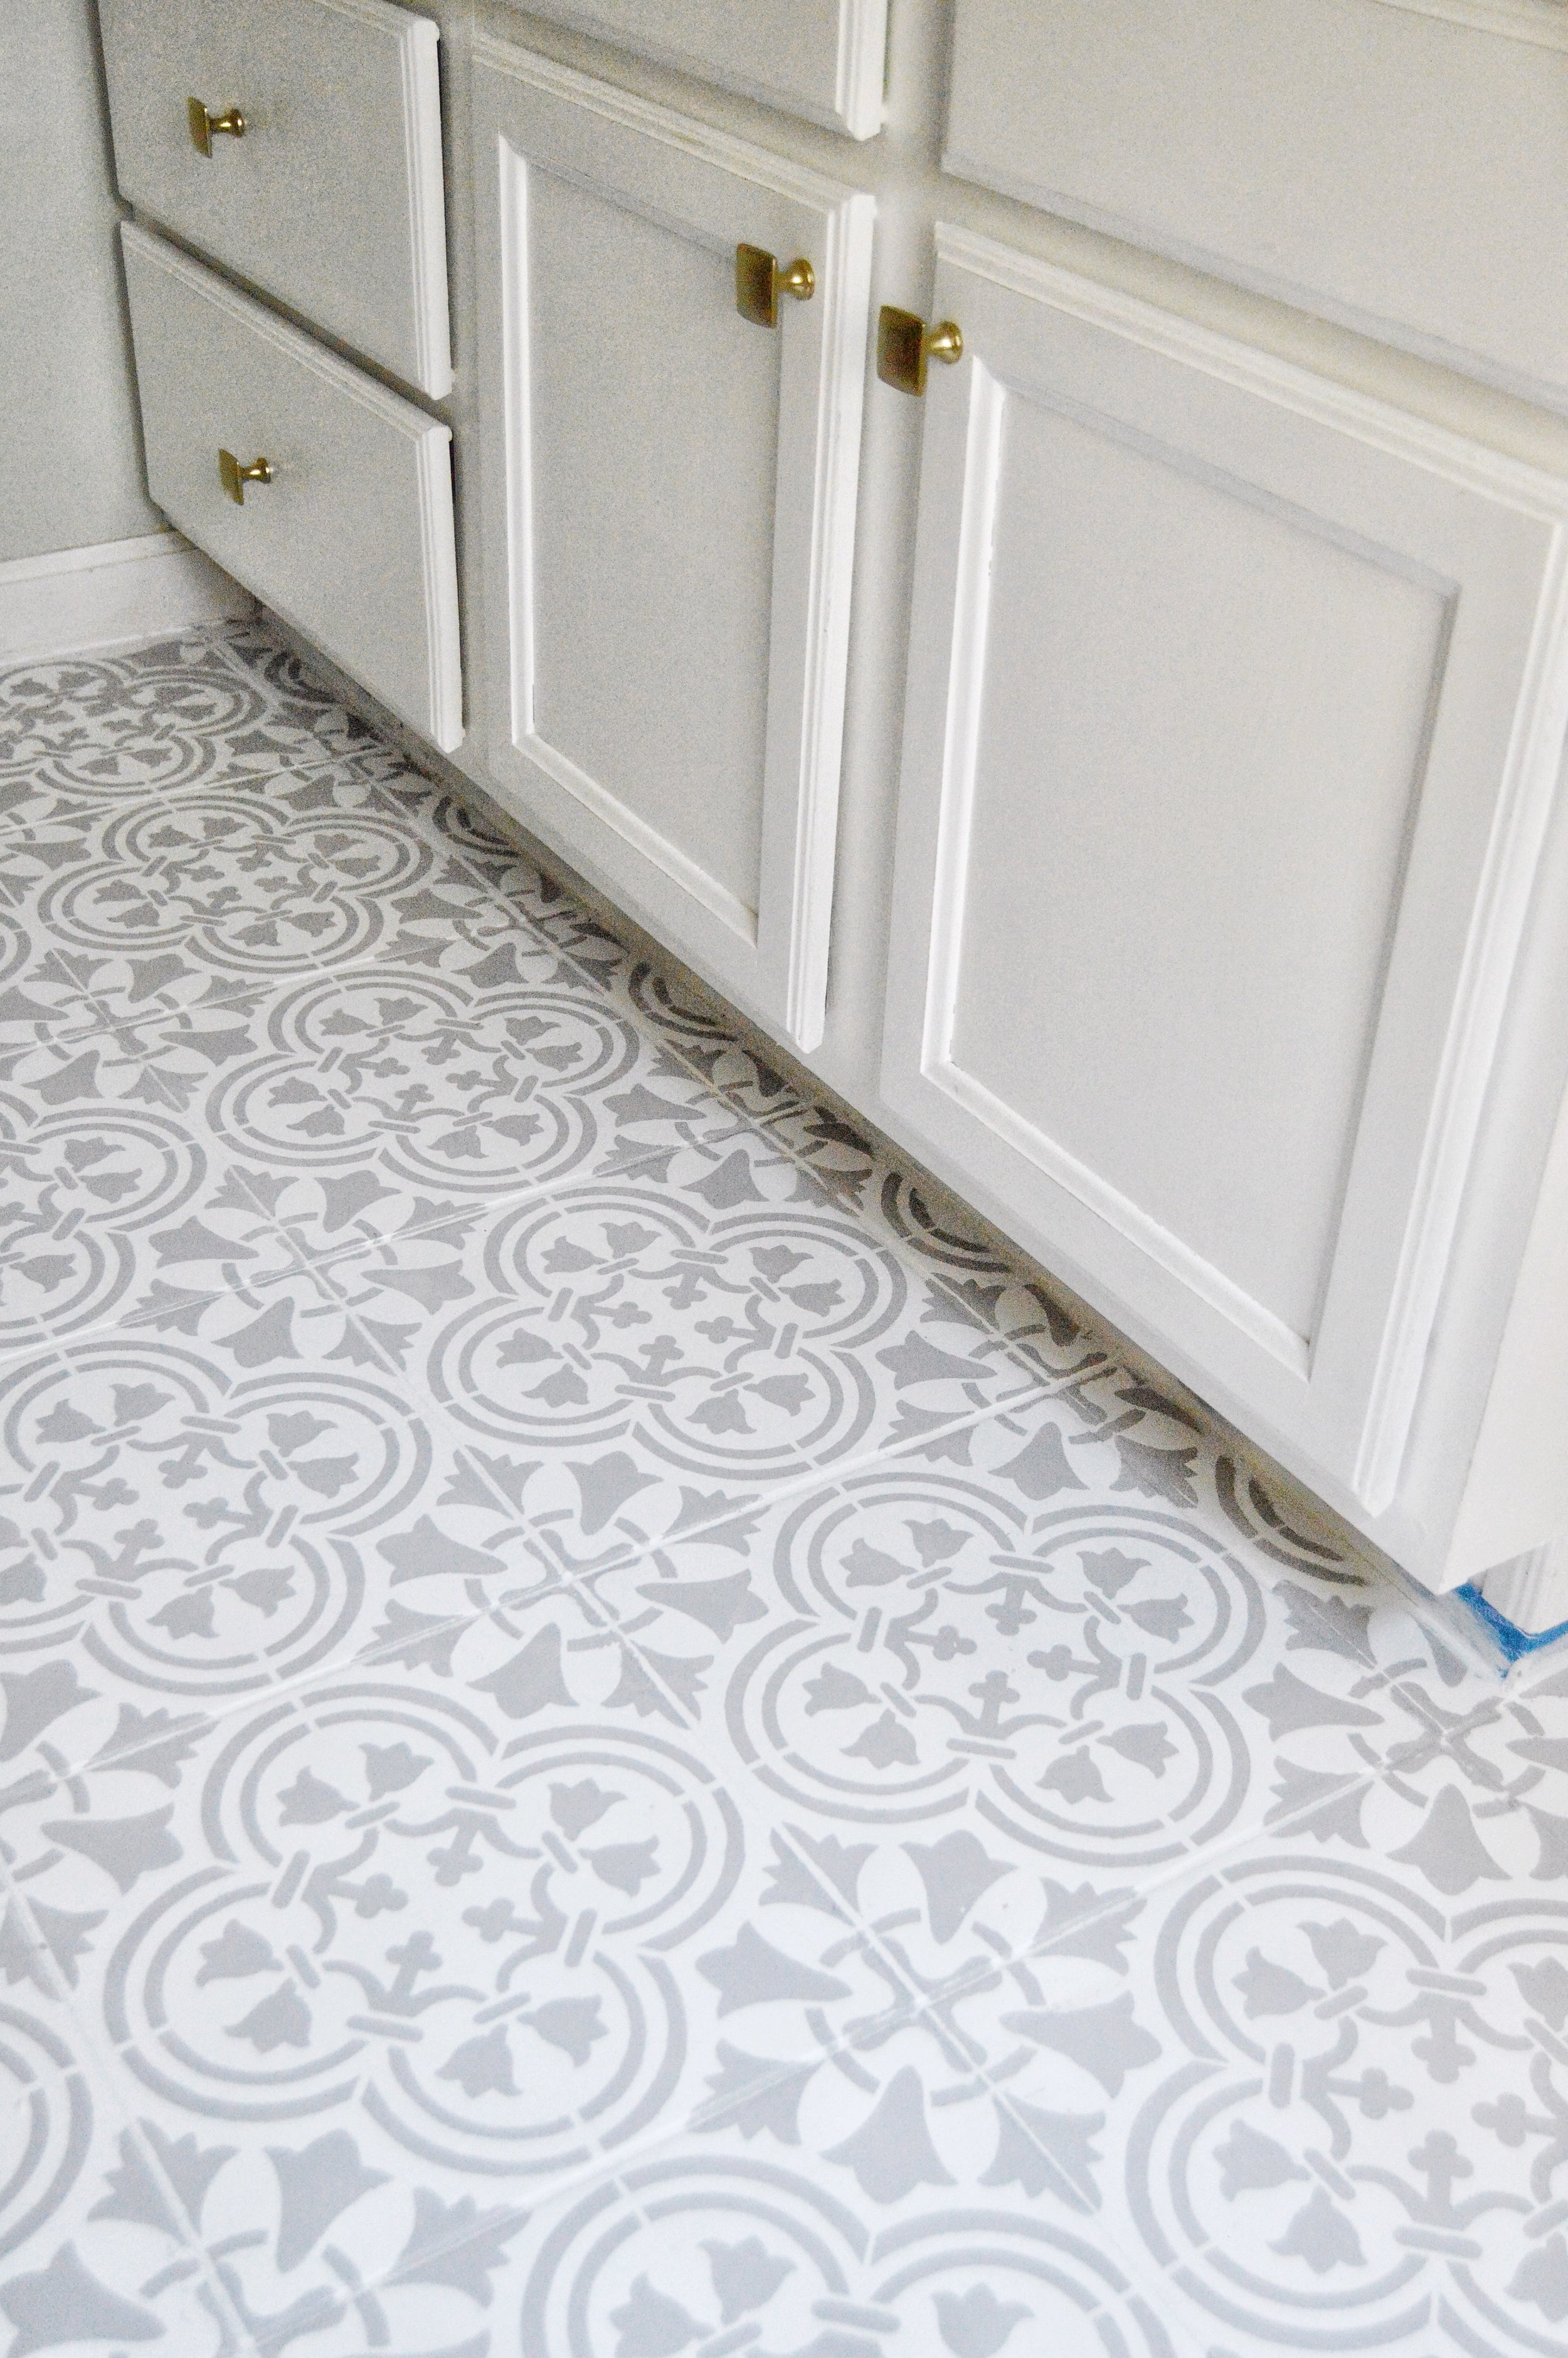 Ideas For Covering Up Tile Floors, Best Flooring To Put Over Ceramic Tile